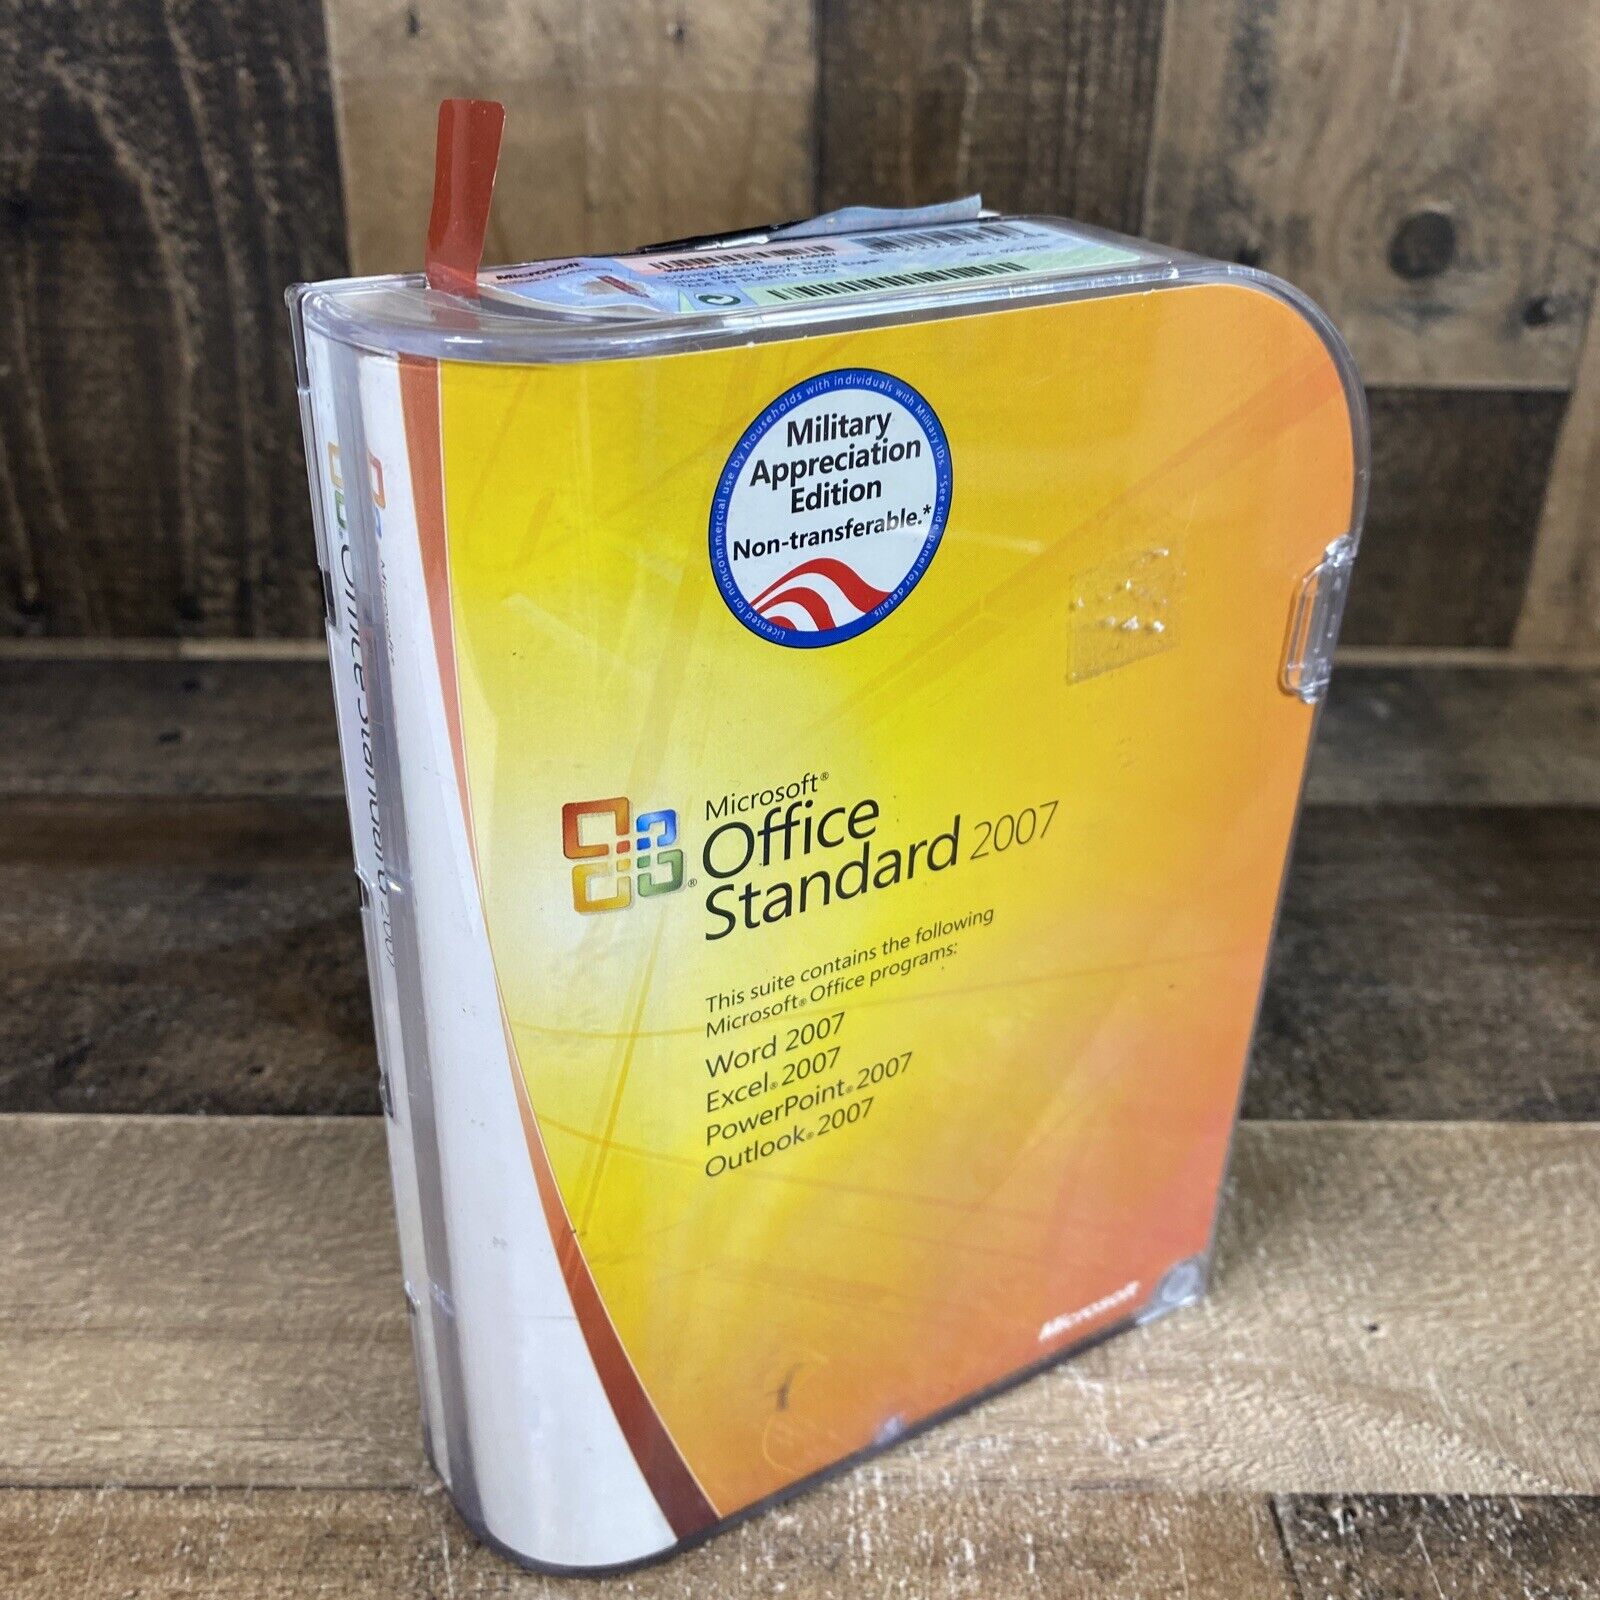 Microsoft Office Standard 2007 (Military Appreciation Edition) W/ Product Key